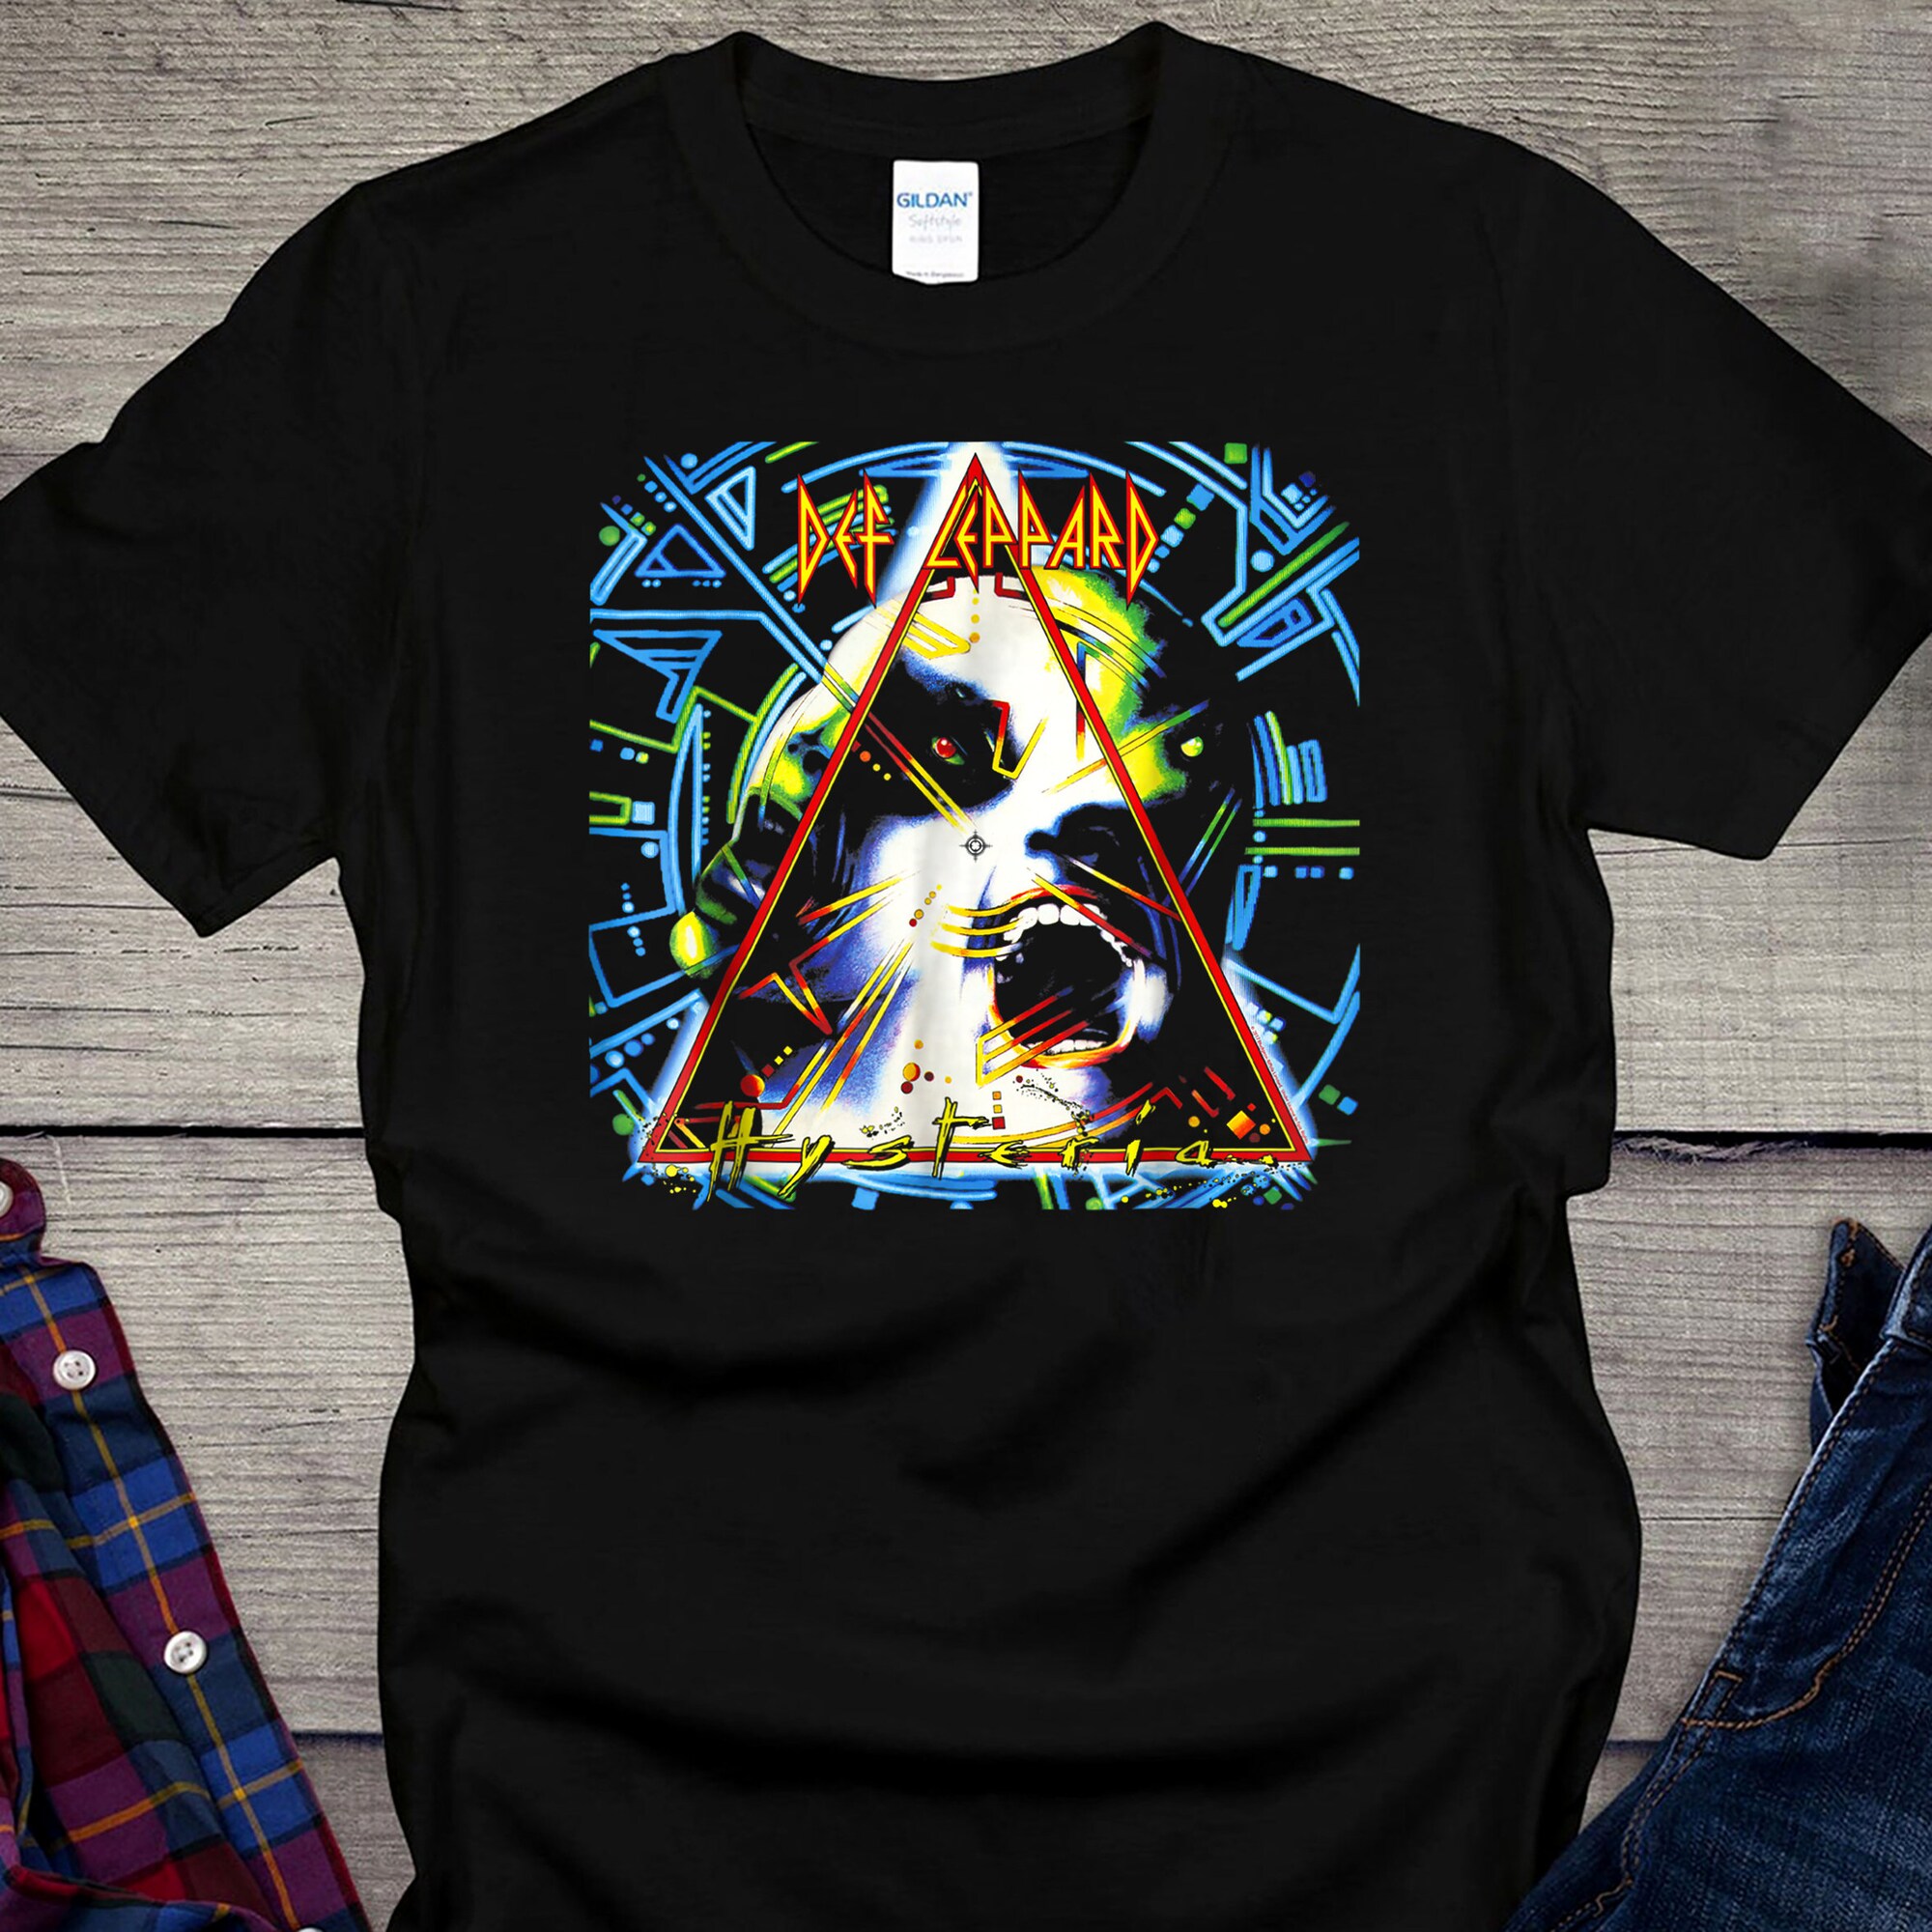 Discover Def Leppard T-Shirt, Hysteria T-Shirt, Def Leppard Hysteria Shirt, Rock and Roll Music Shirt